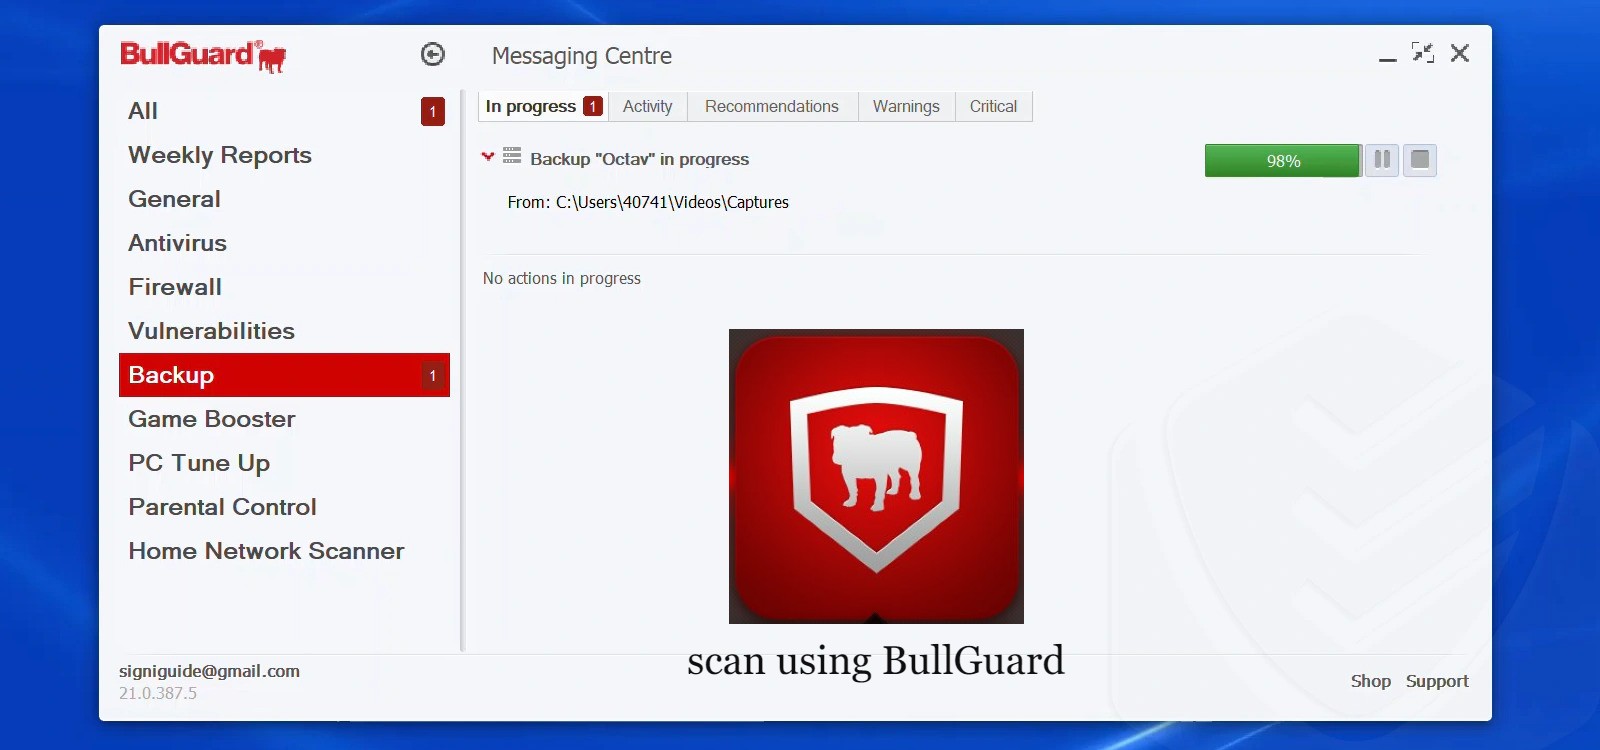 procedure to scan using BullGuard